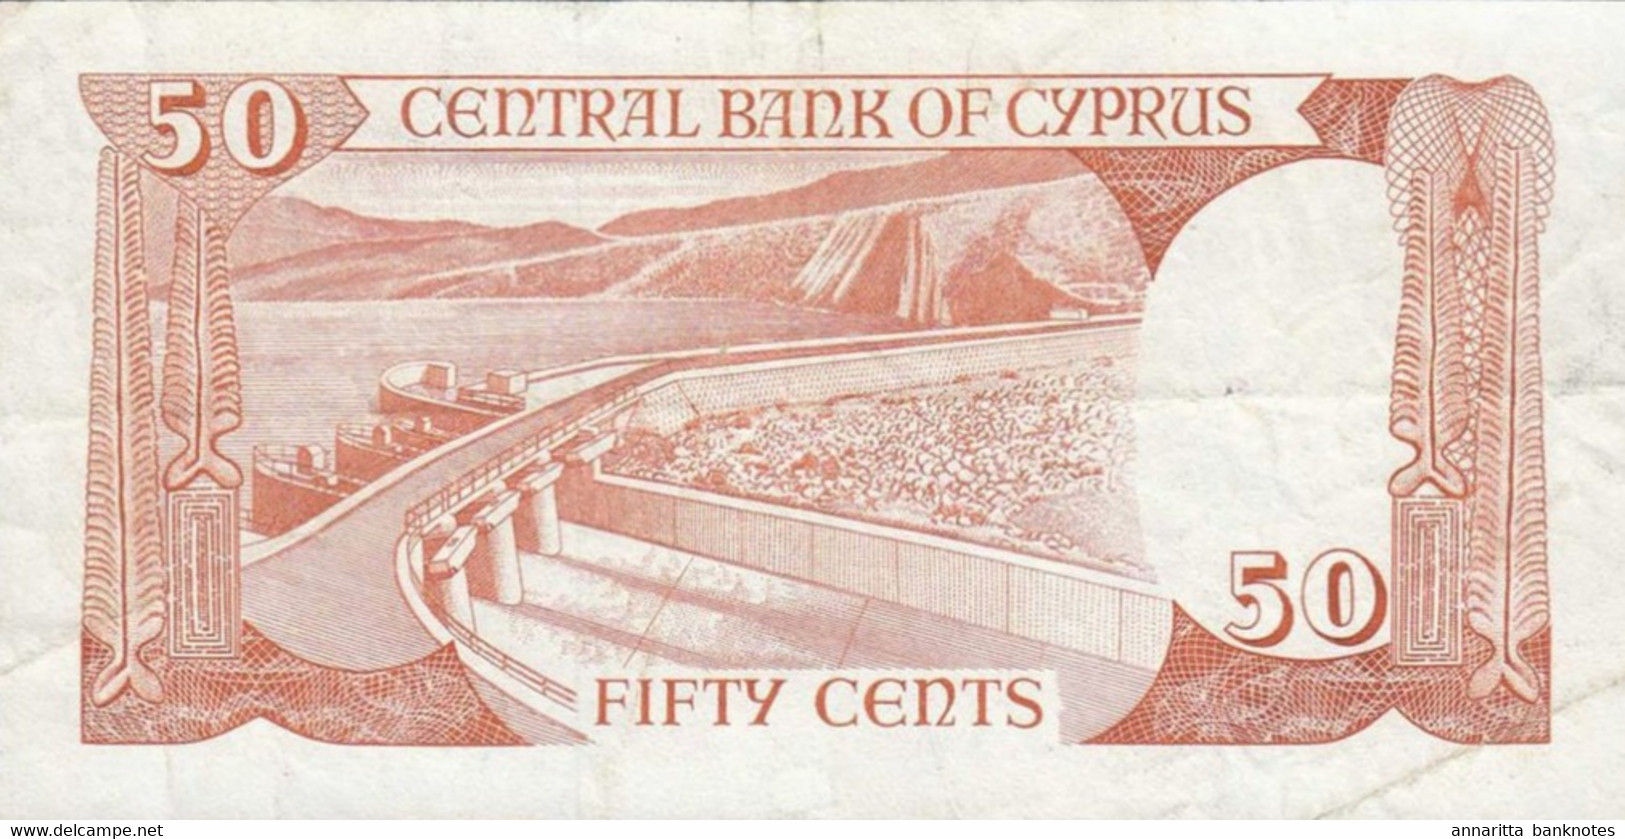 Cyprus 50 Cents 1989, S/N P324890 VF, P-52a, CY B311c - Cyprus